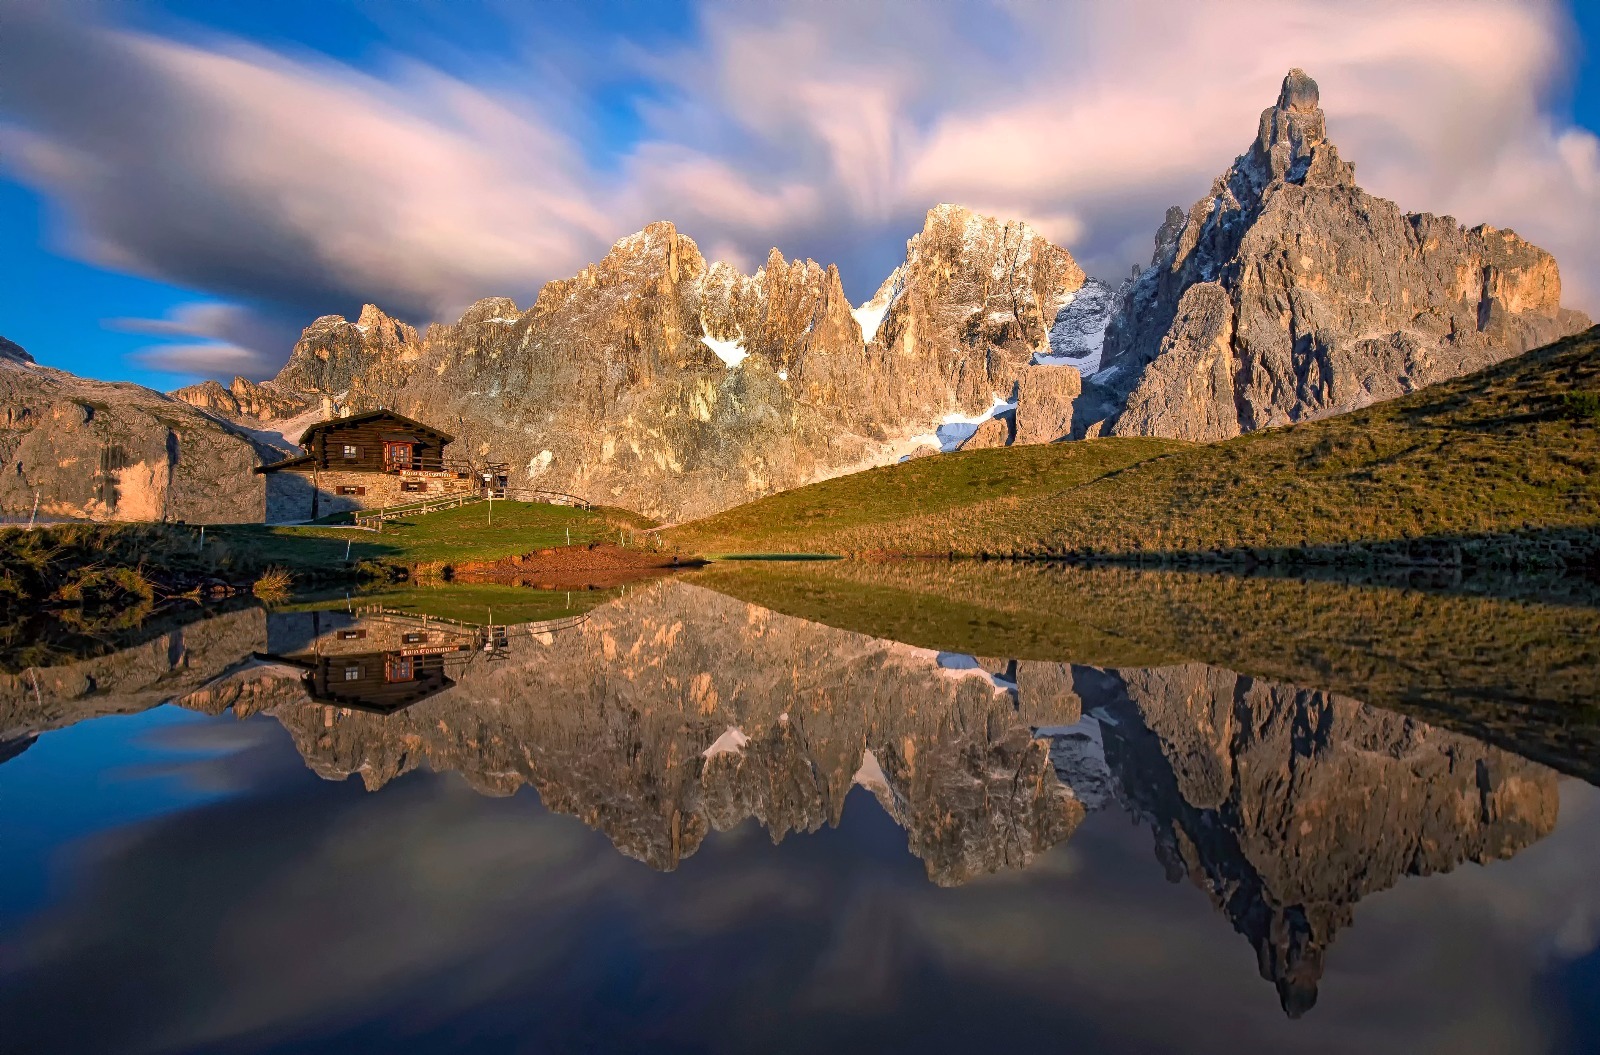 Mirror of the mountains...